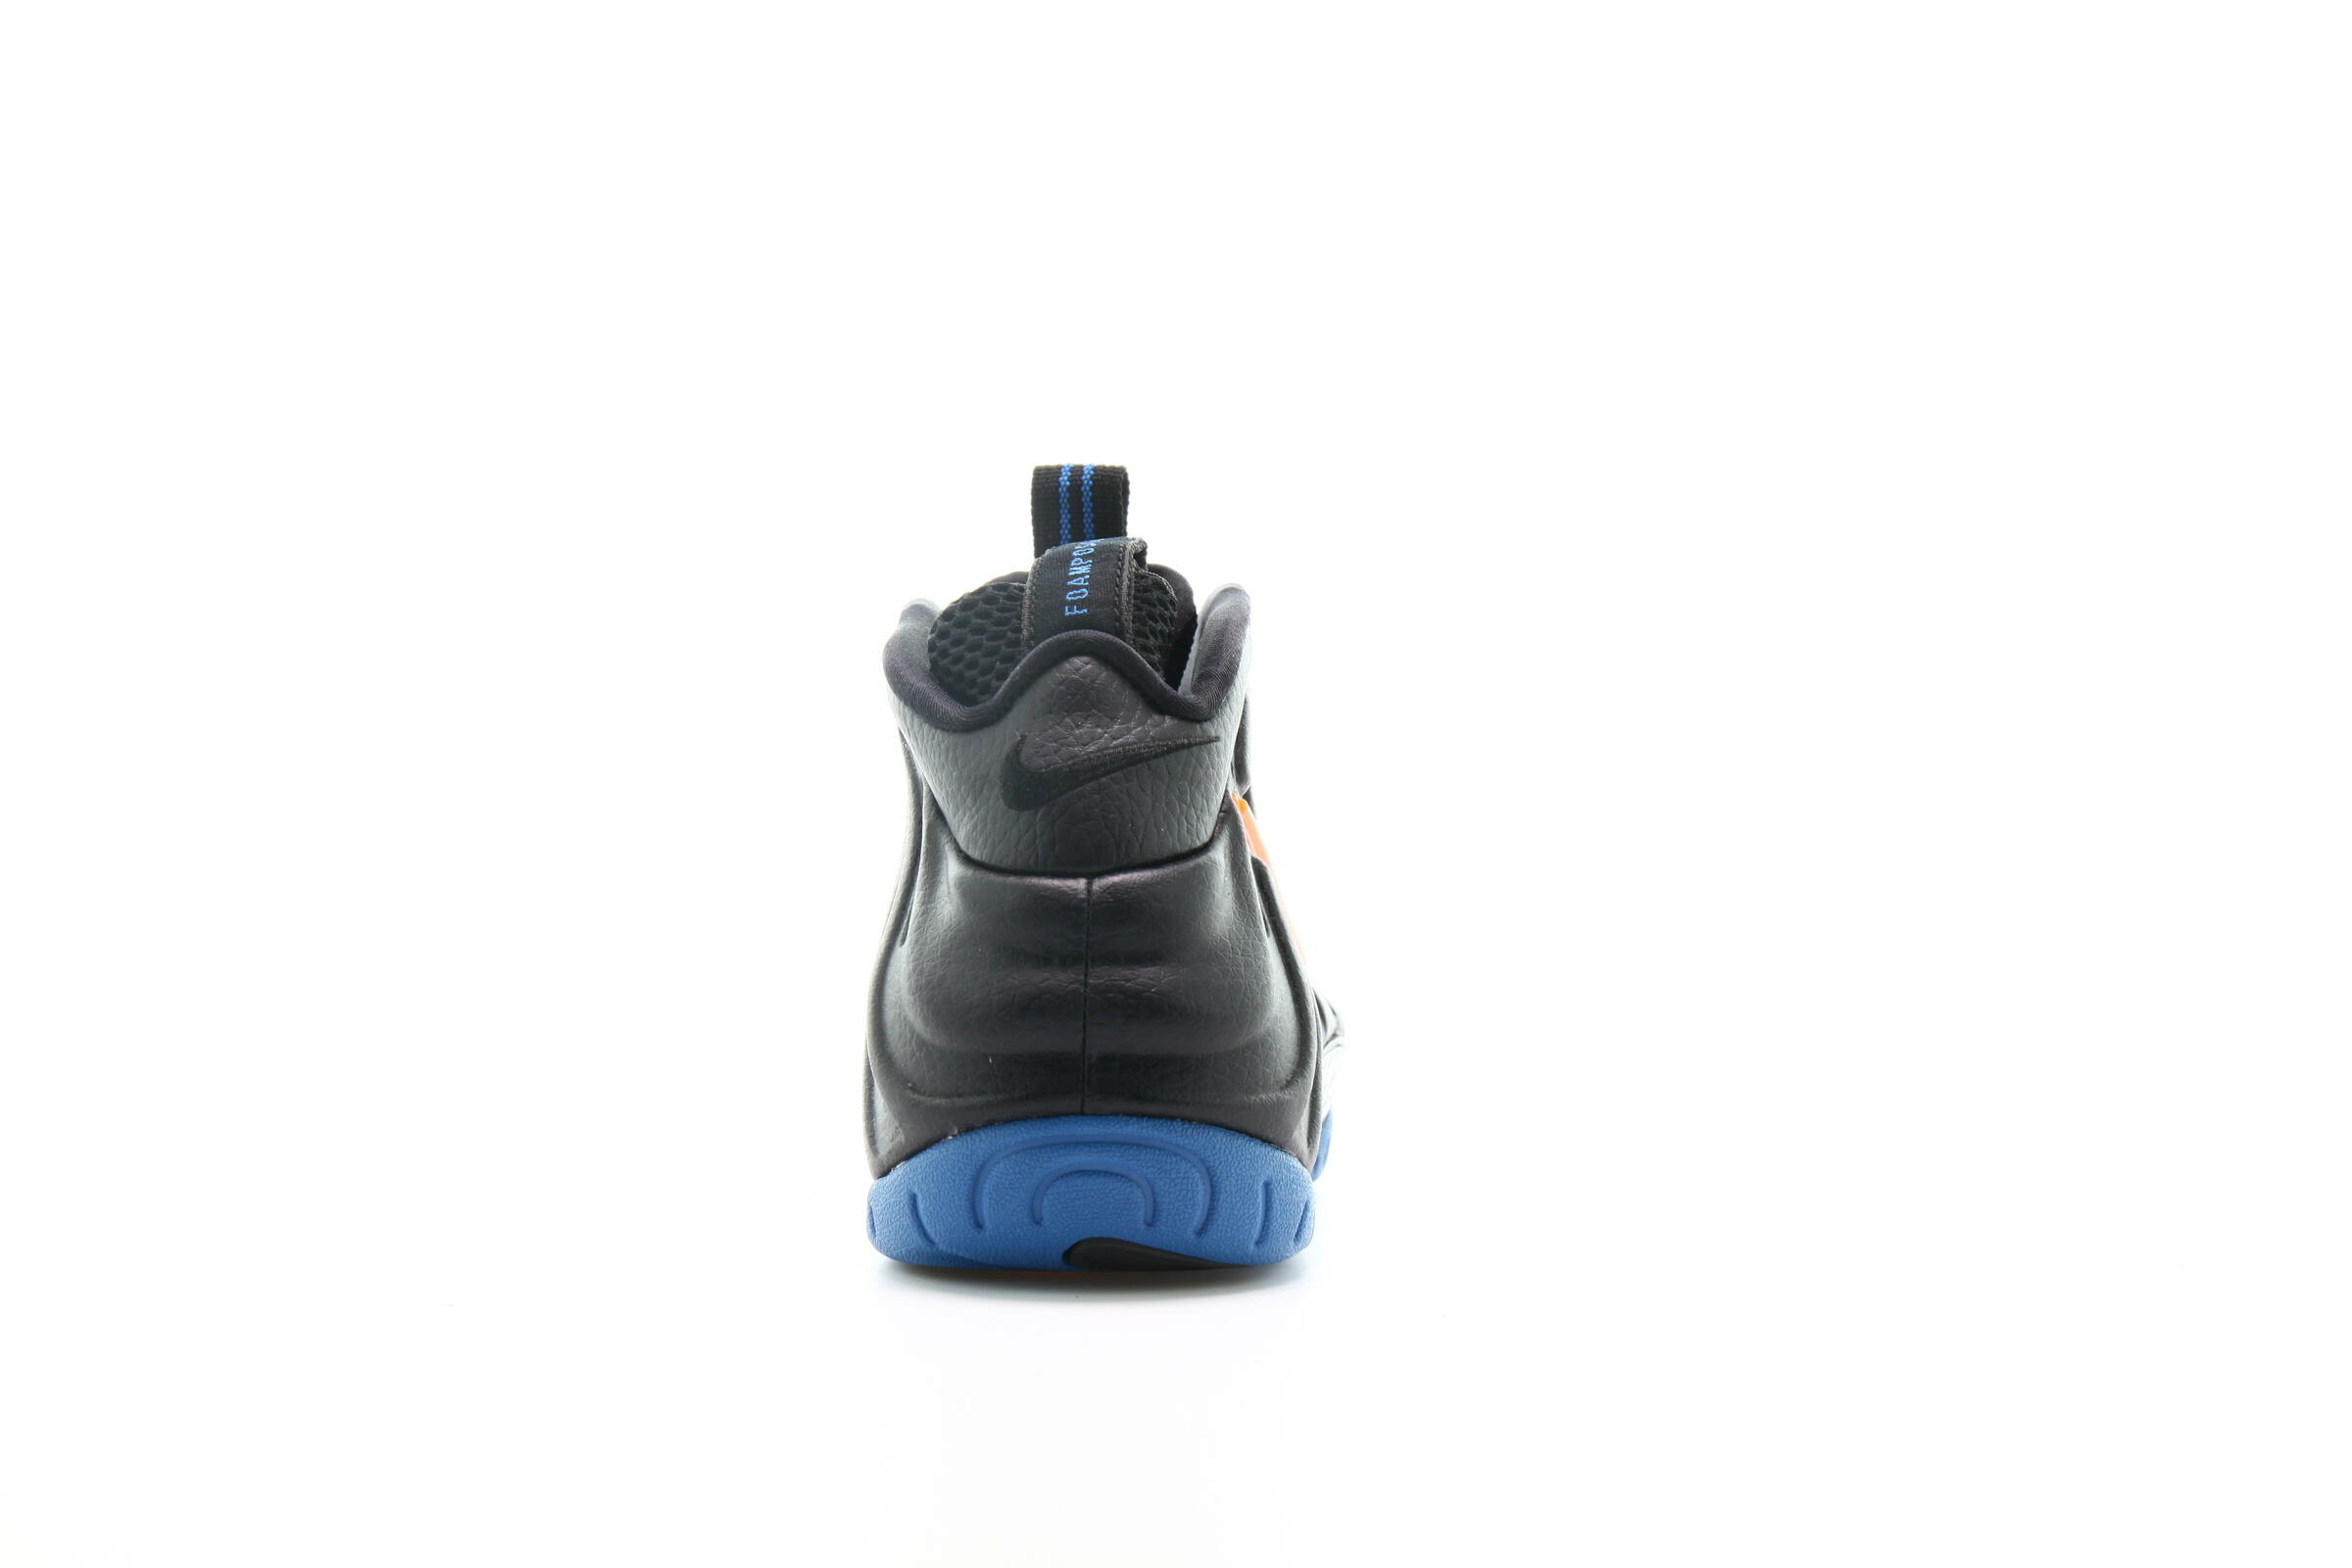 Nike Air Foamposite Pro "Black"